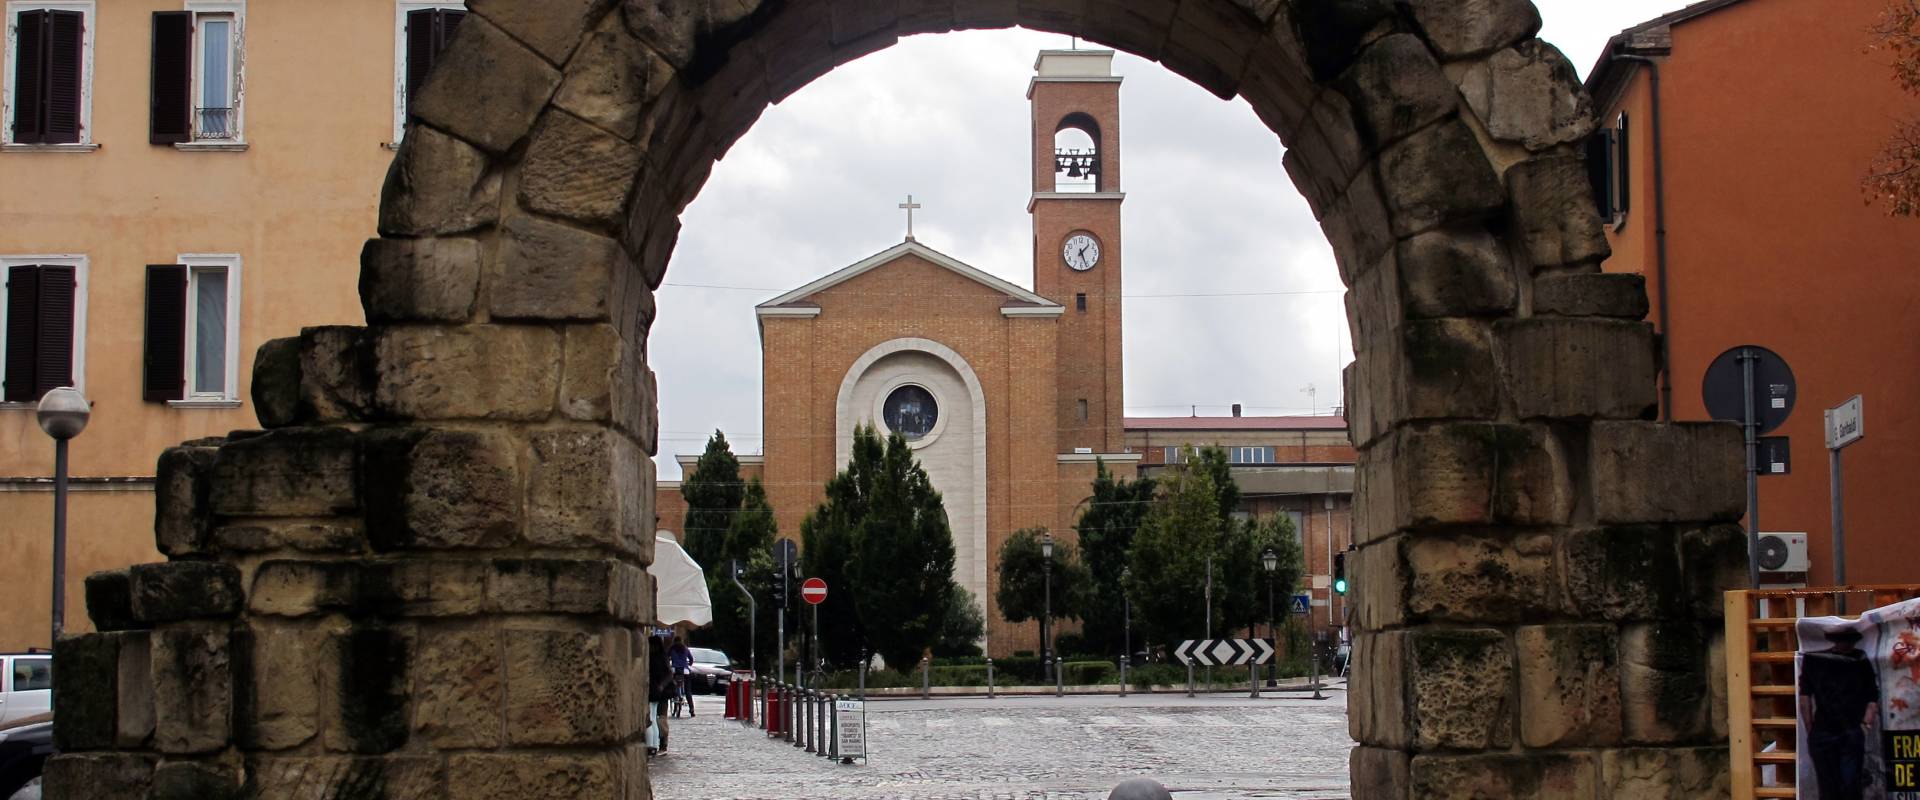 Rimini, porta montanara, int. 01 foto di Sailko